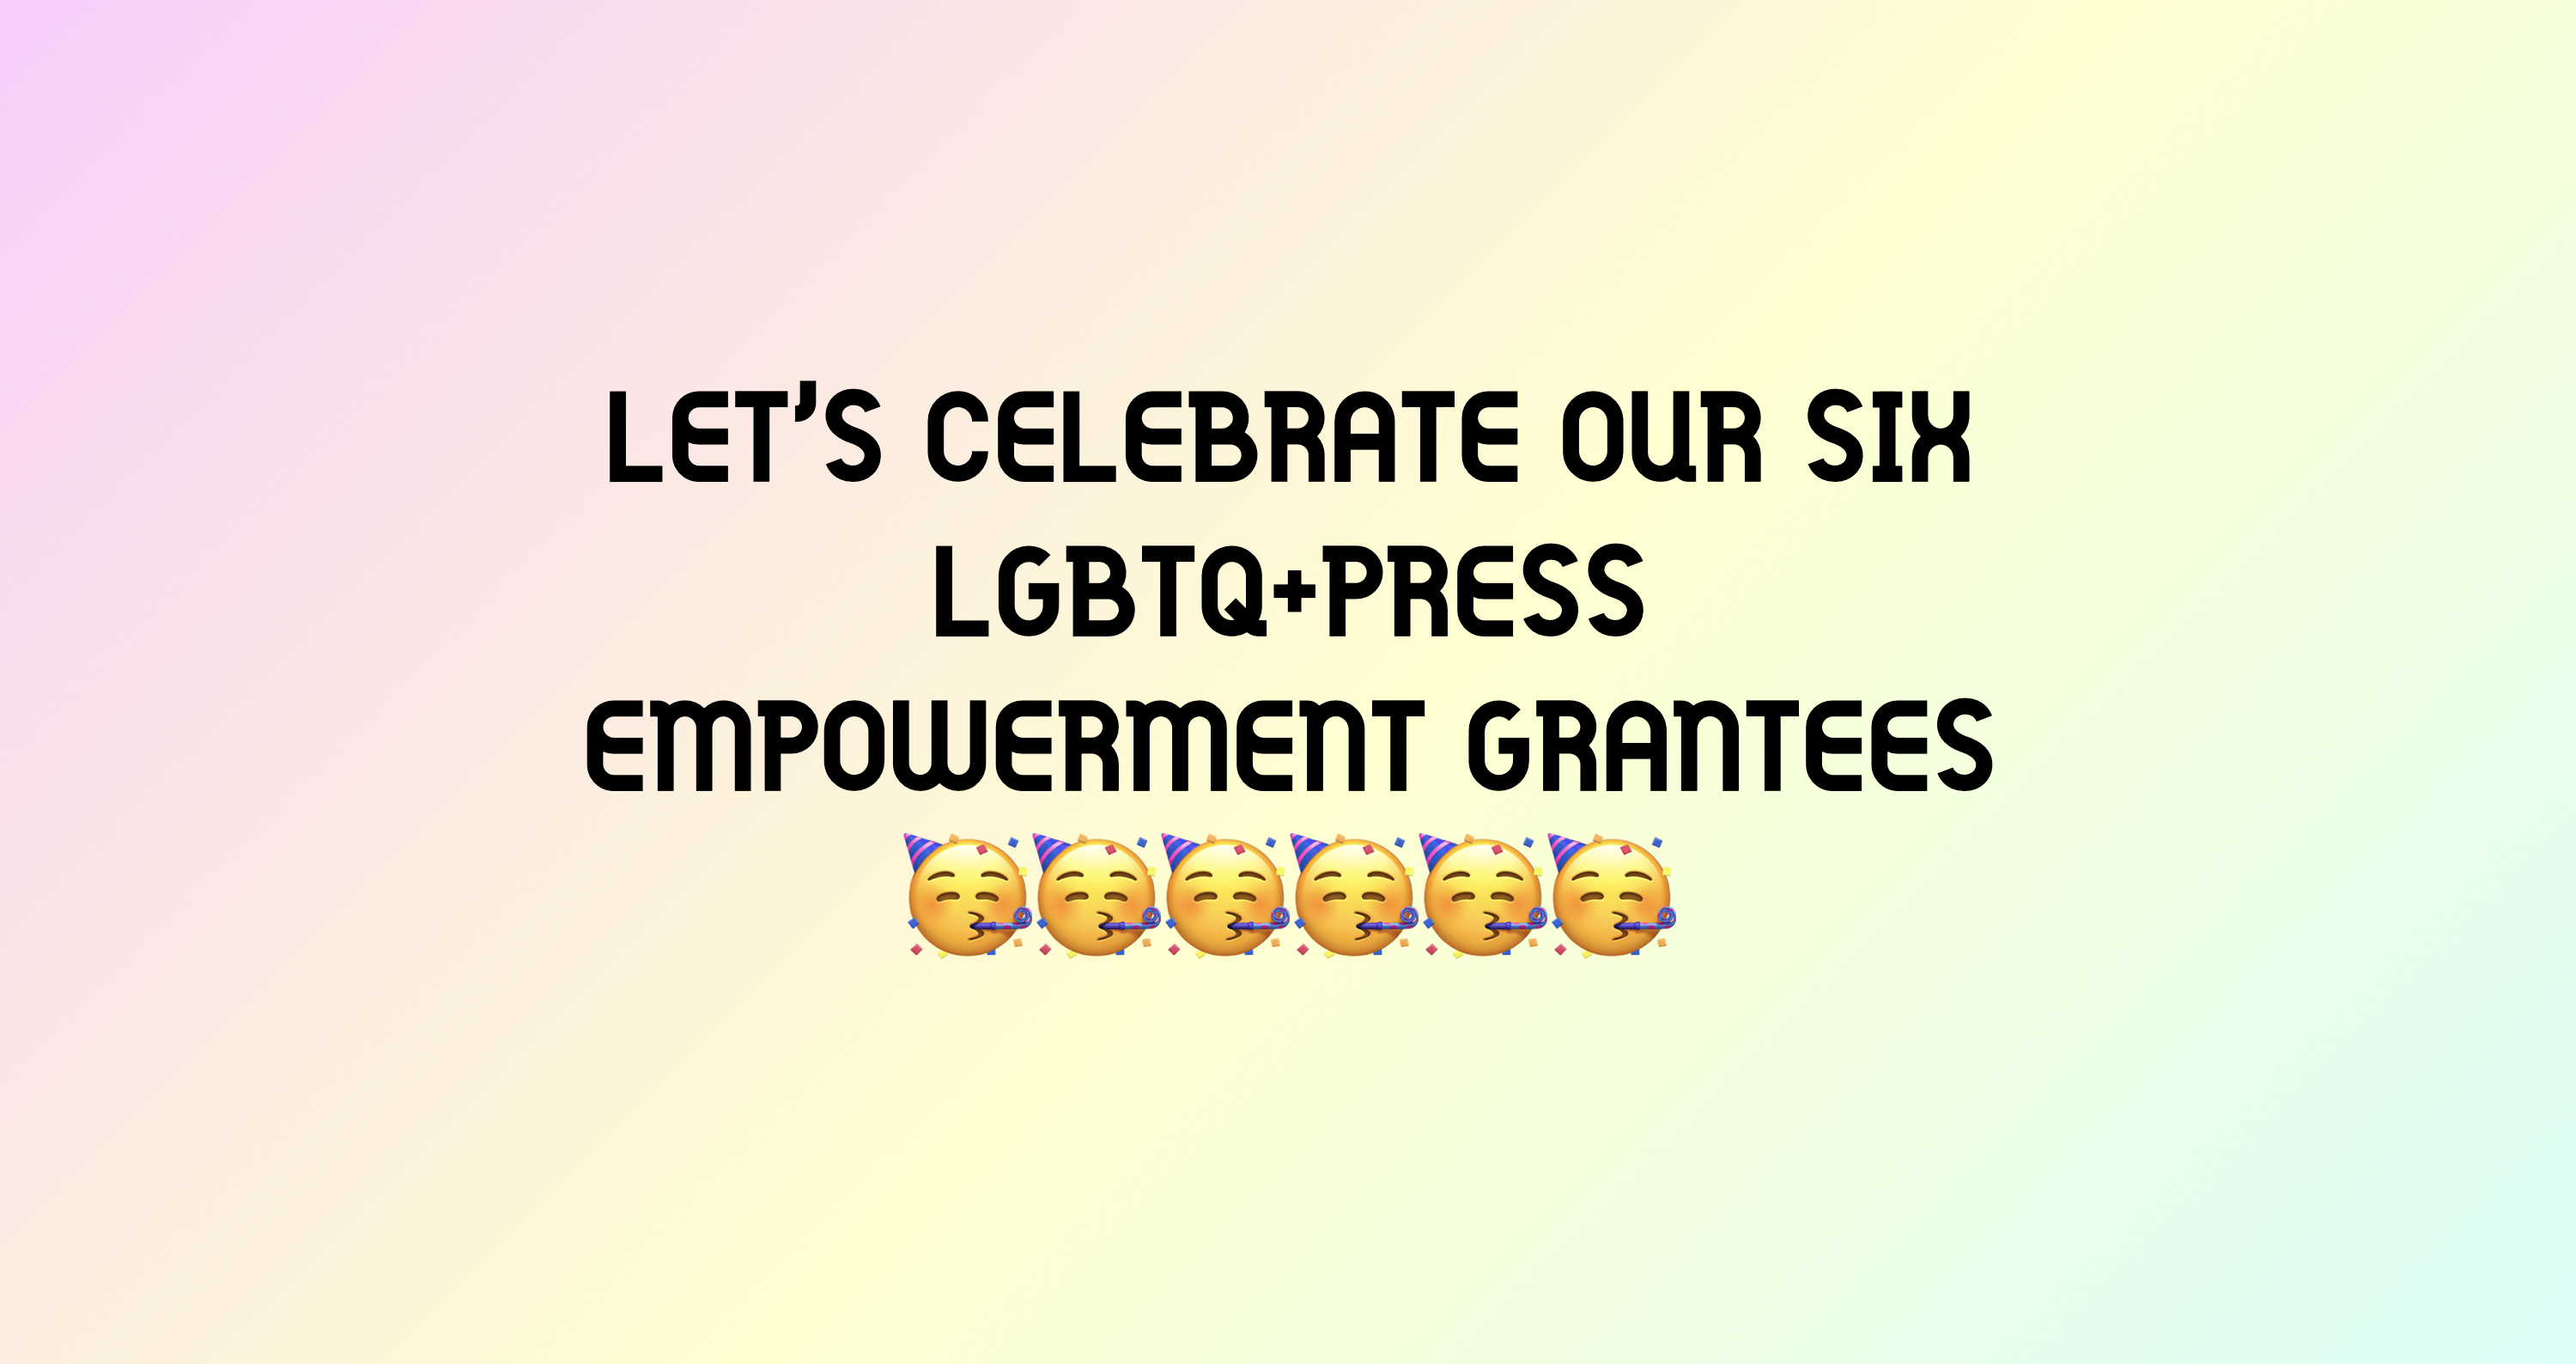 Let’s celebrate our six LGBTQ+Press Empowerment Grantees